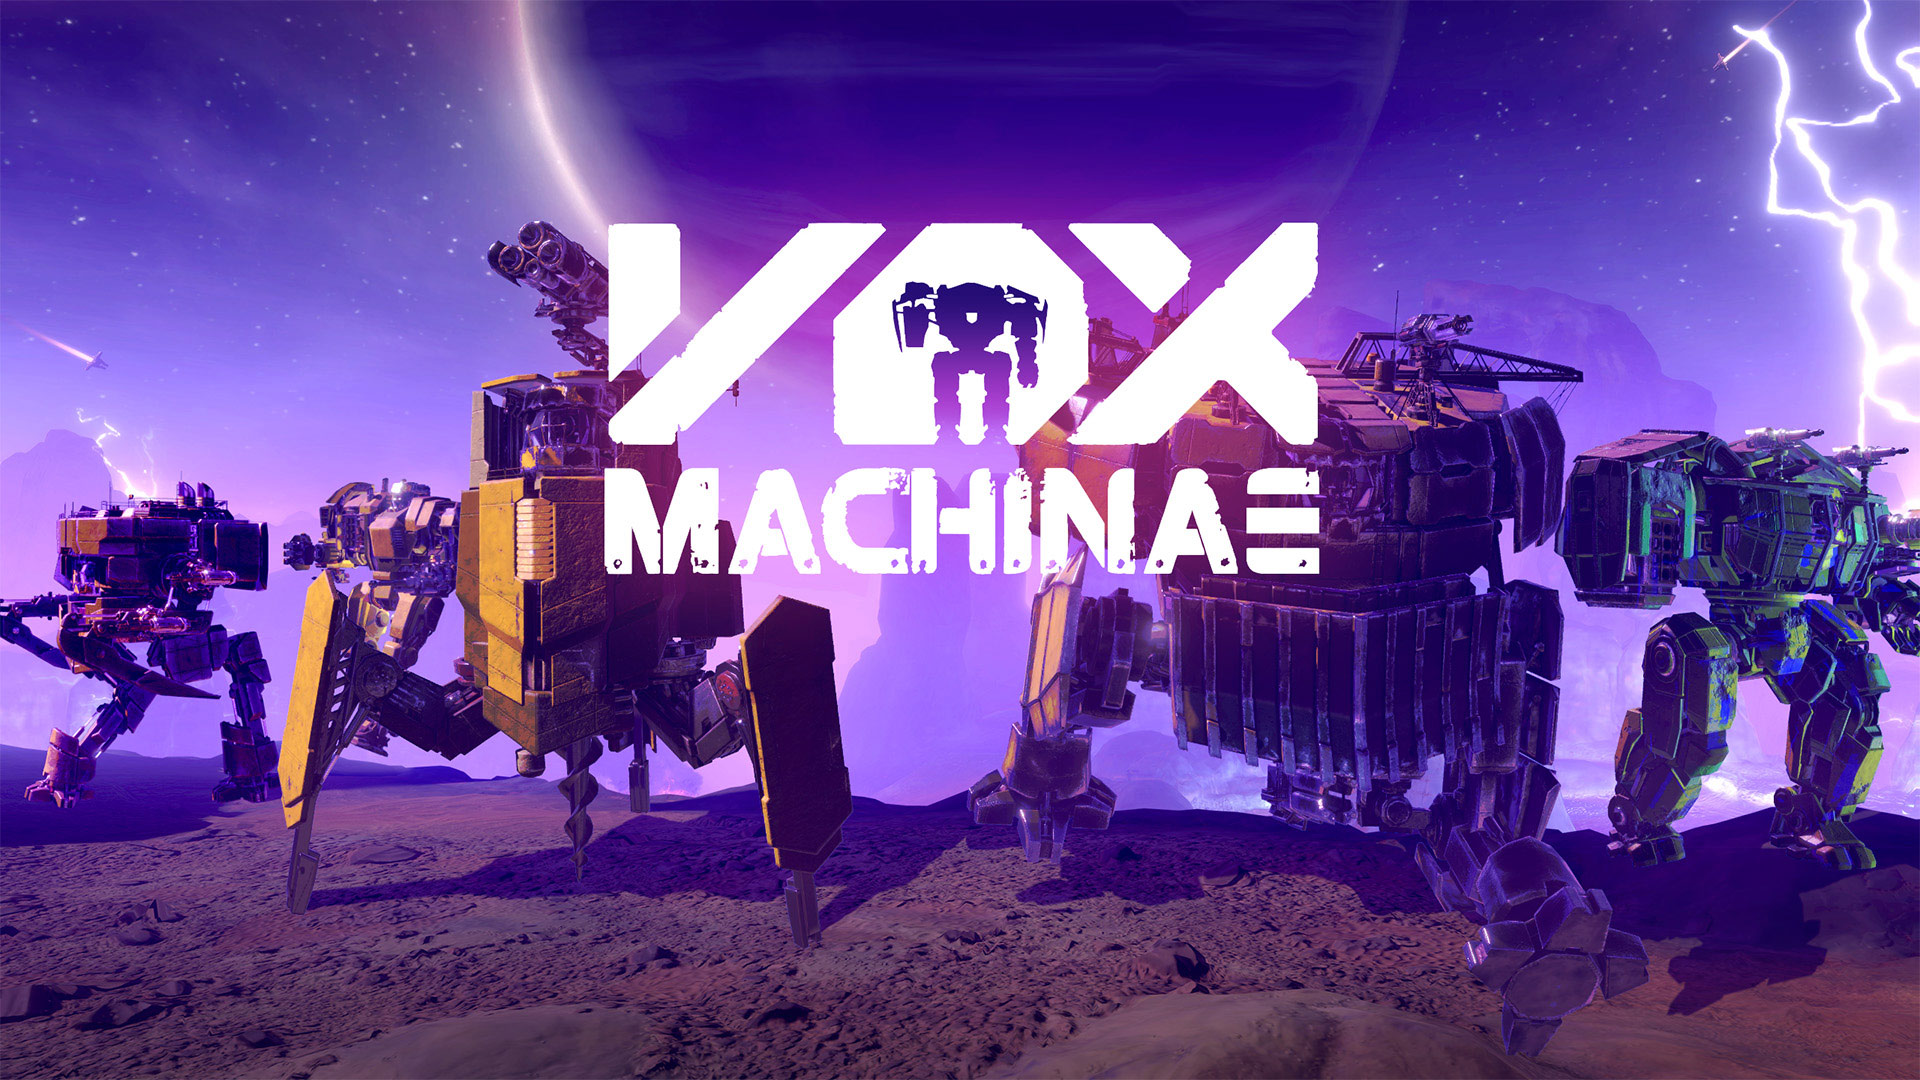 vox machinae review